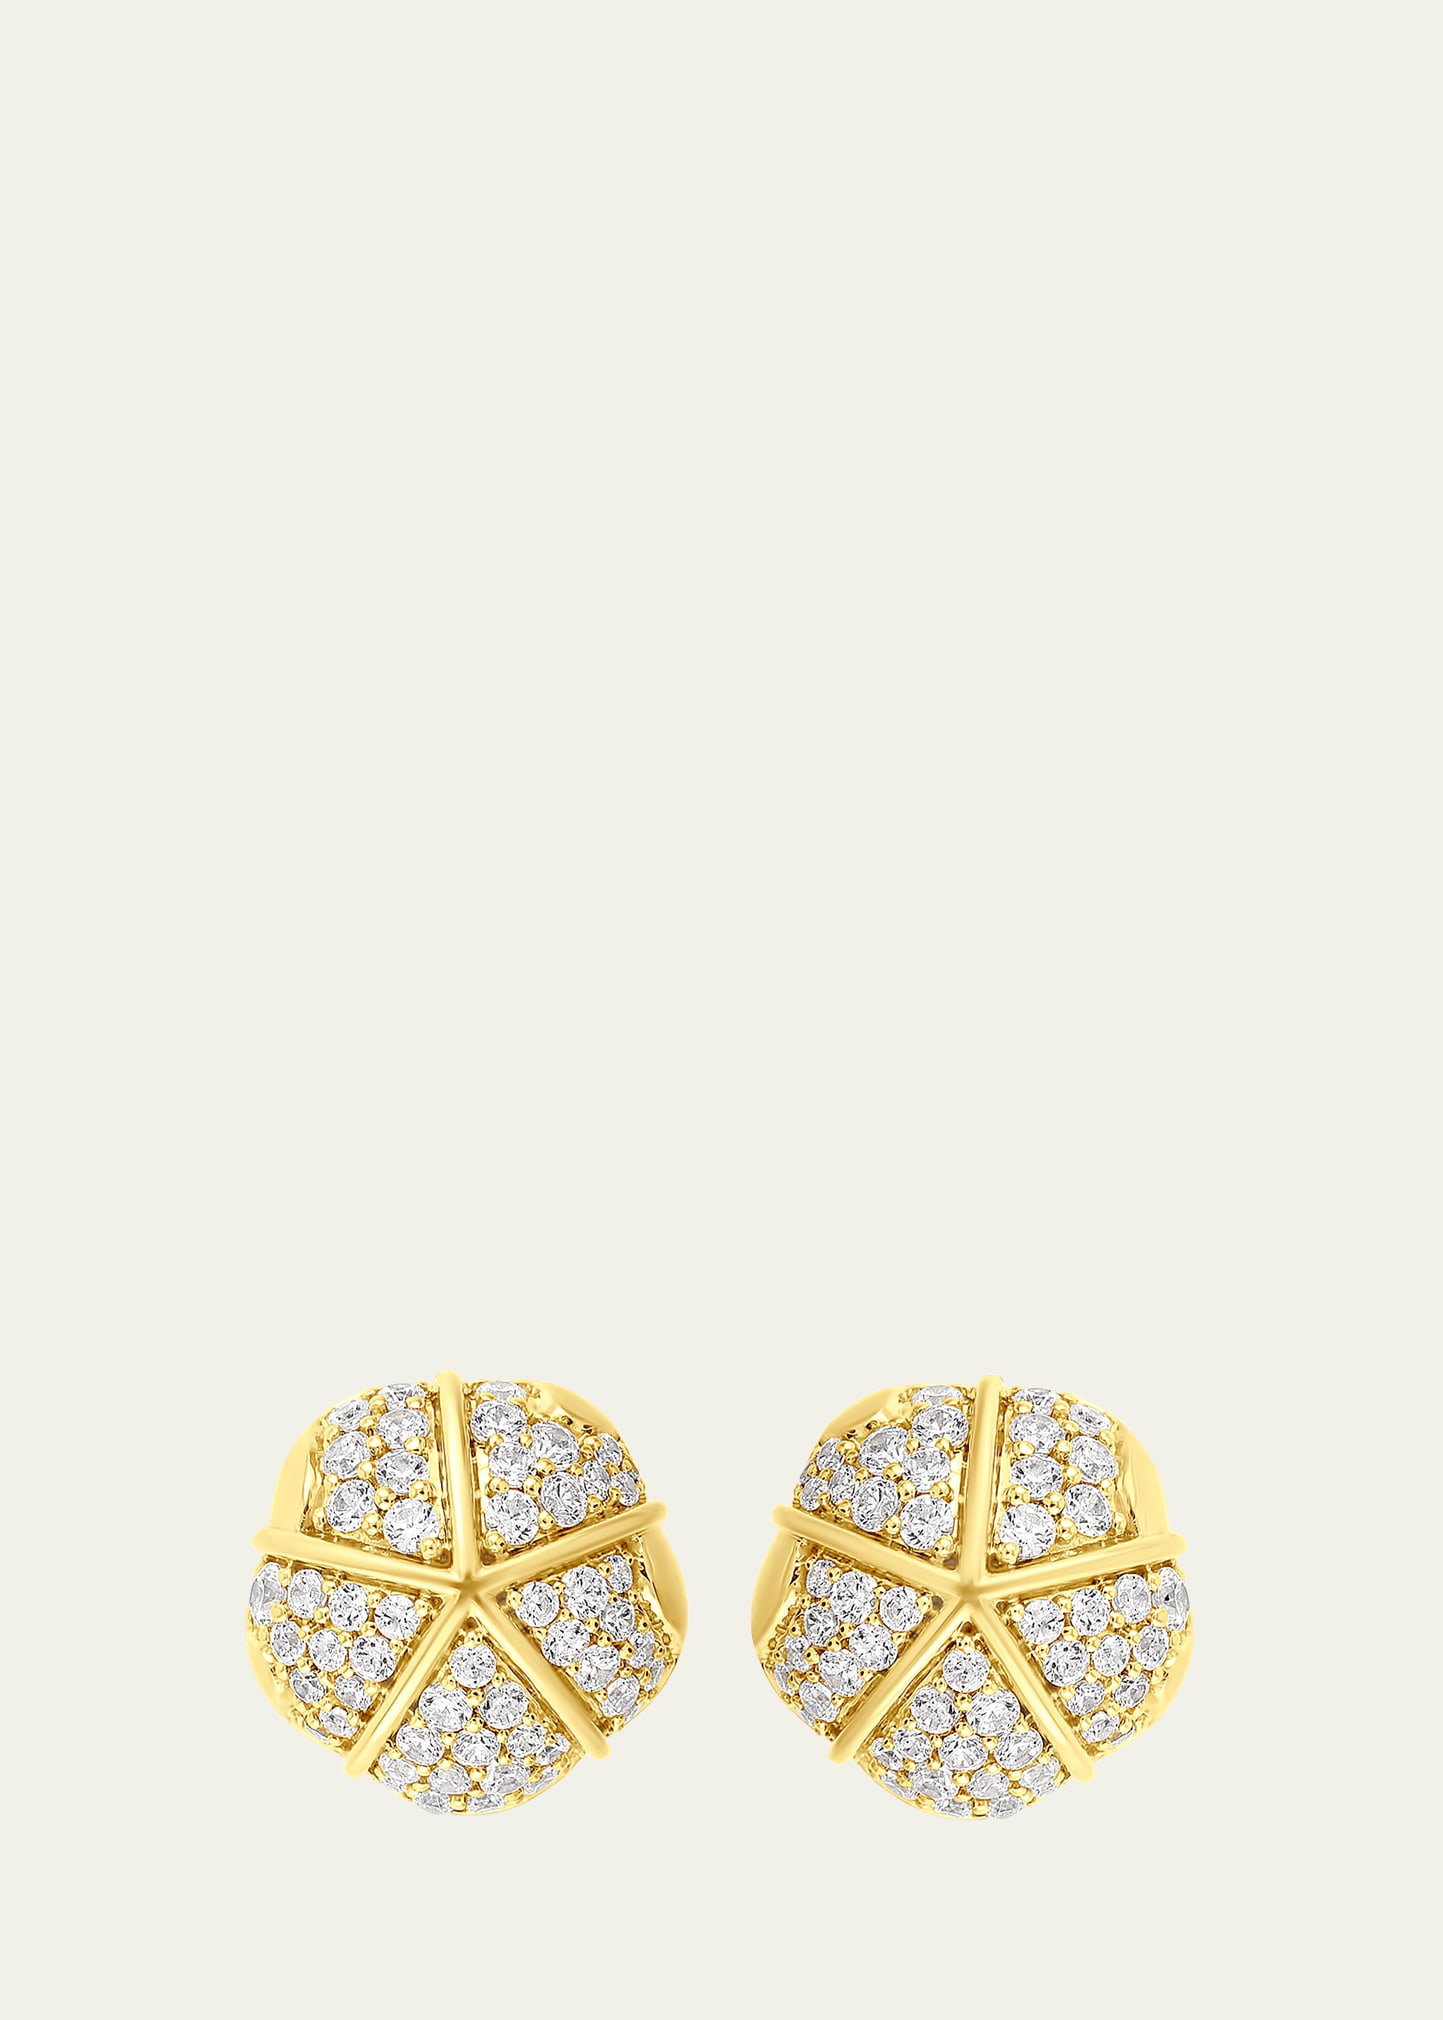 Almasika 18k Yellow Gold Terra Nova Grande Pave Stud Earrings With White Diamonds In Yg